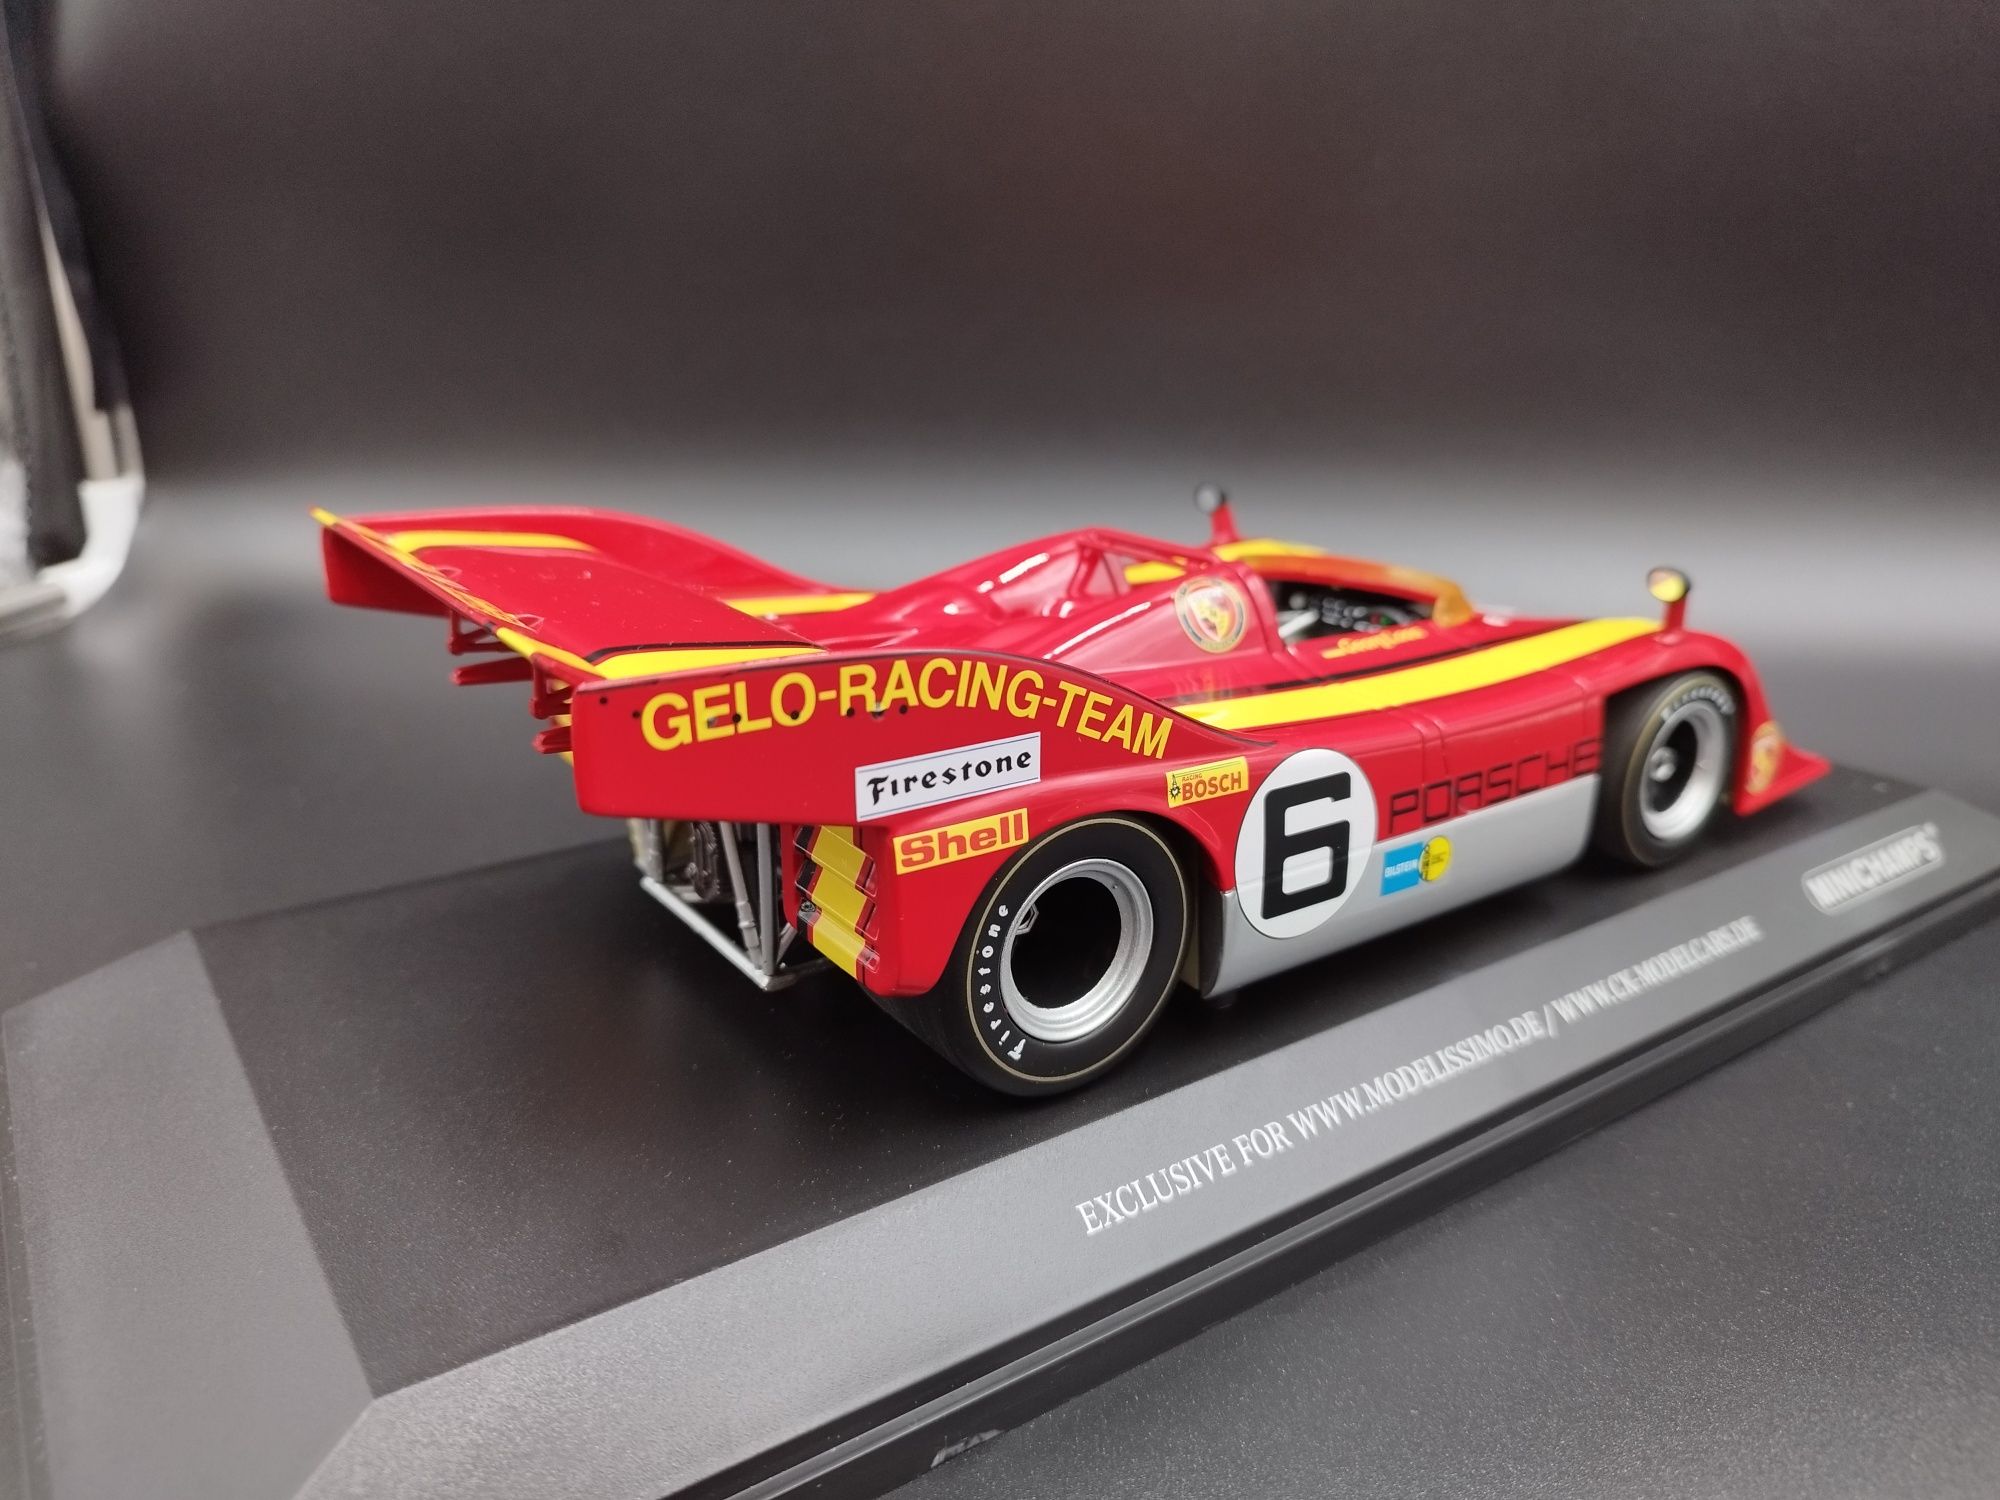 1:18 Minichamps Porsche 917/10 Gelo-Racing-Team #6 model limit 350 szt